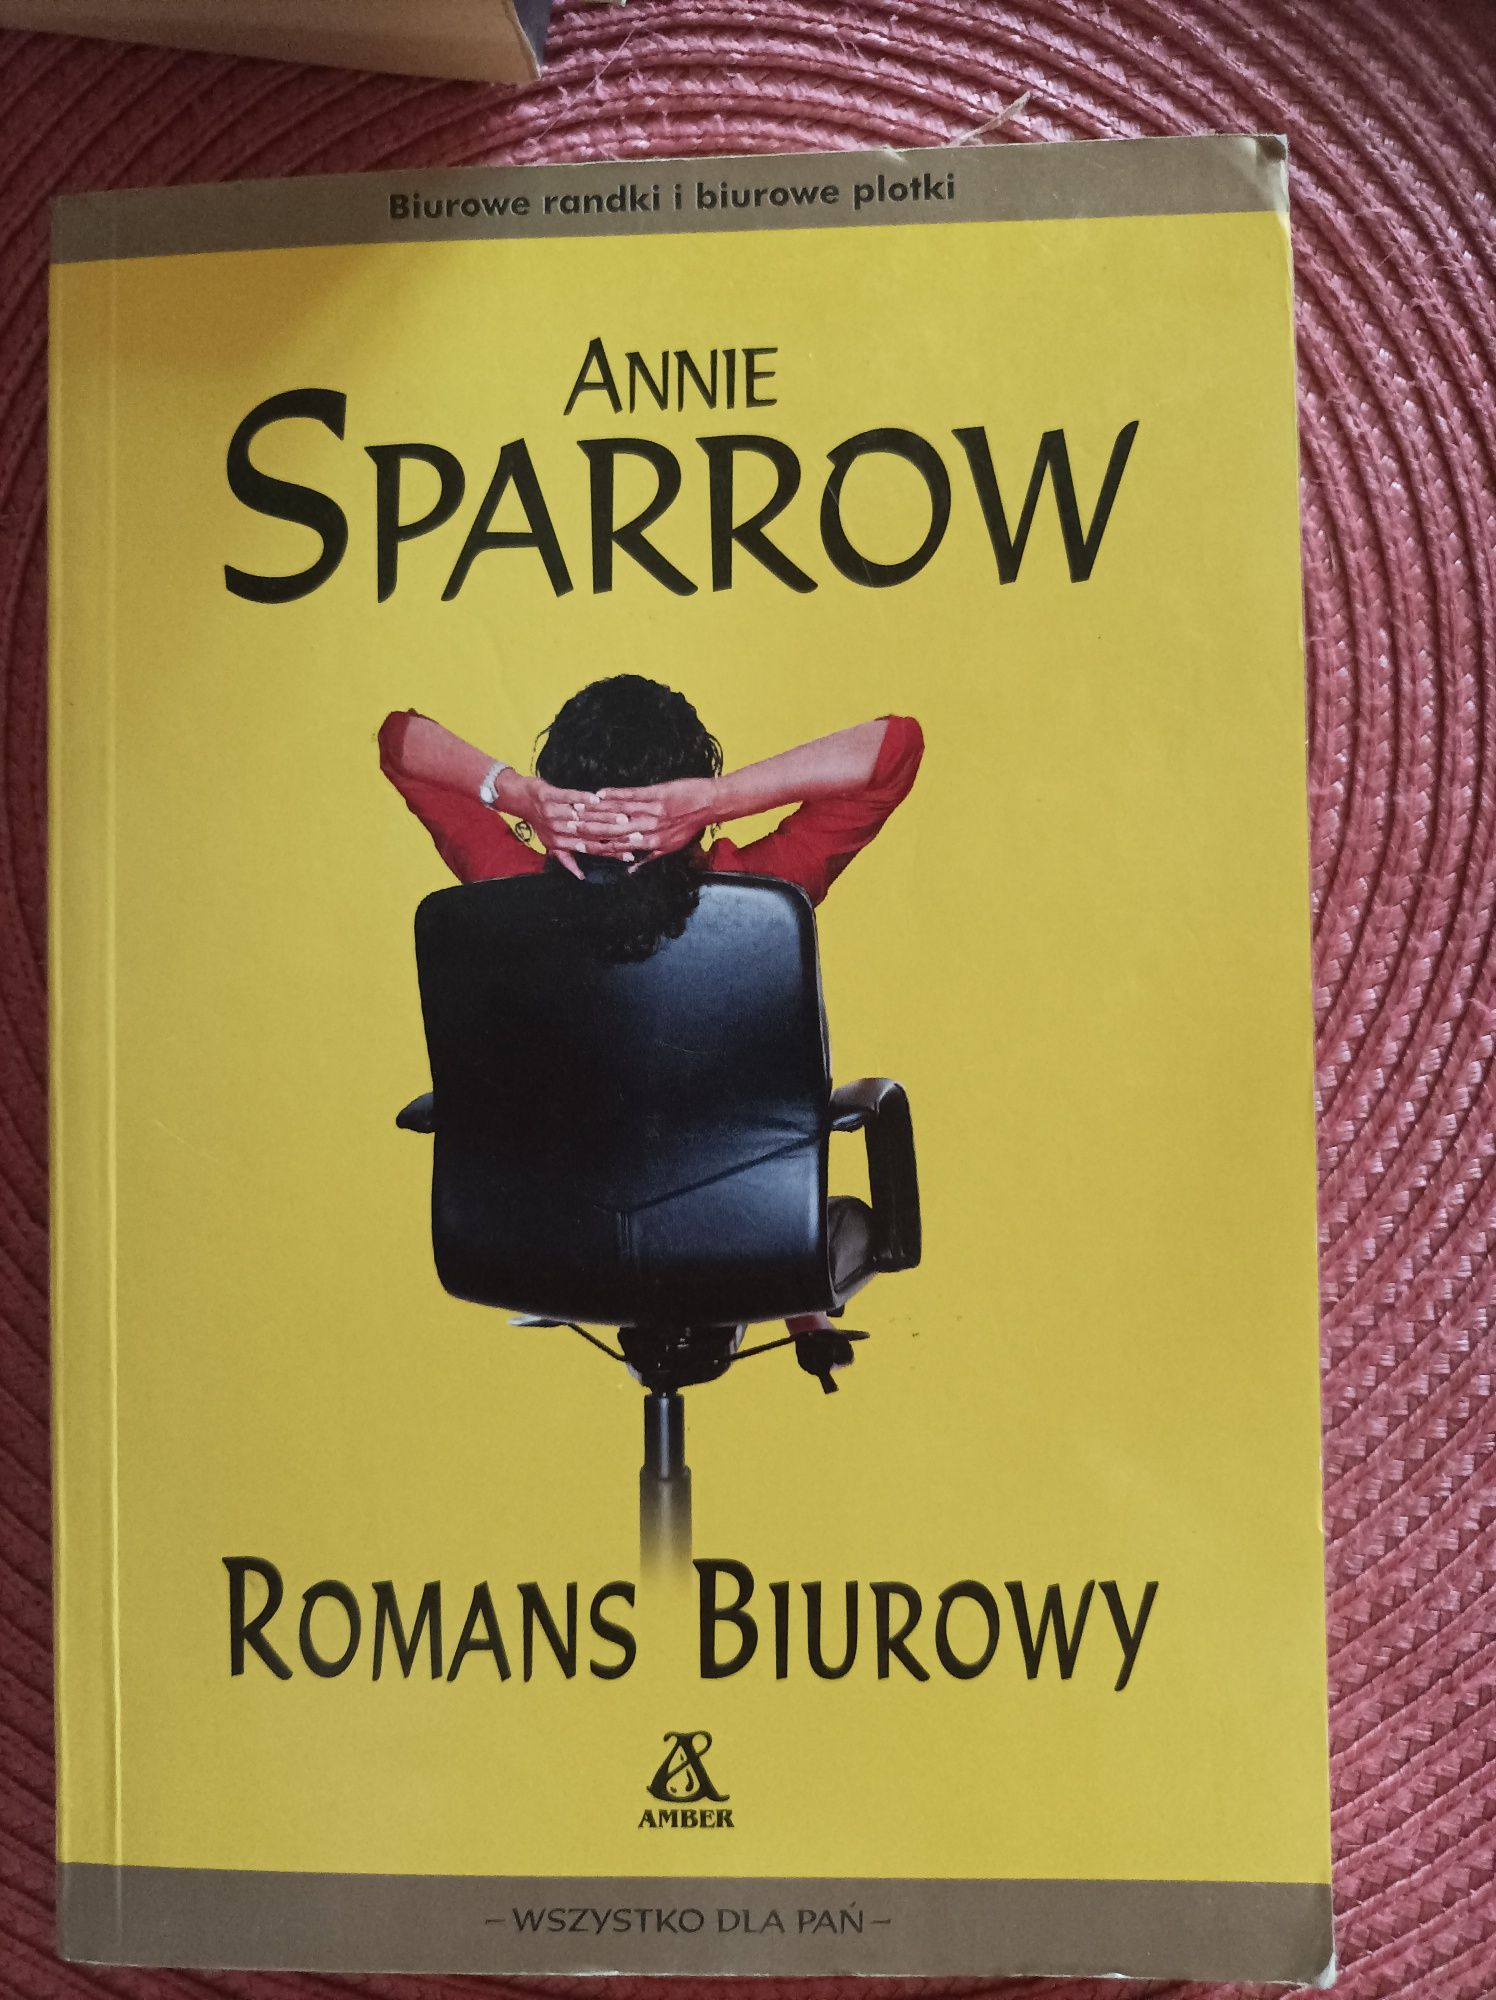 Romans biurowy  Annie Sparrow